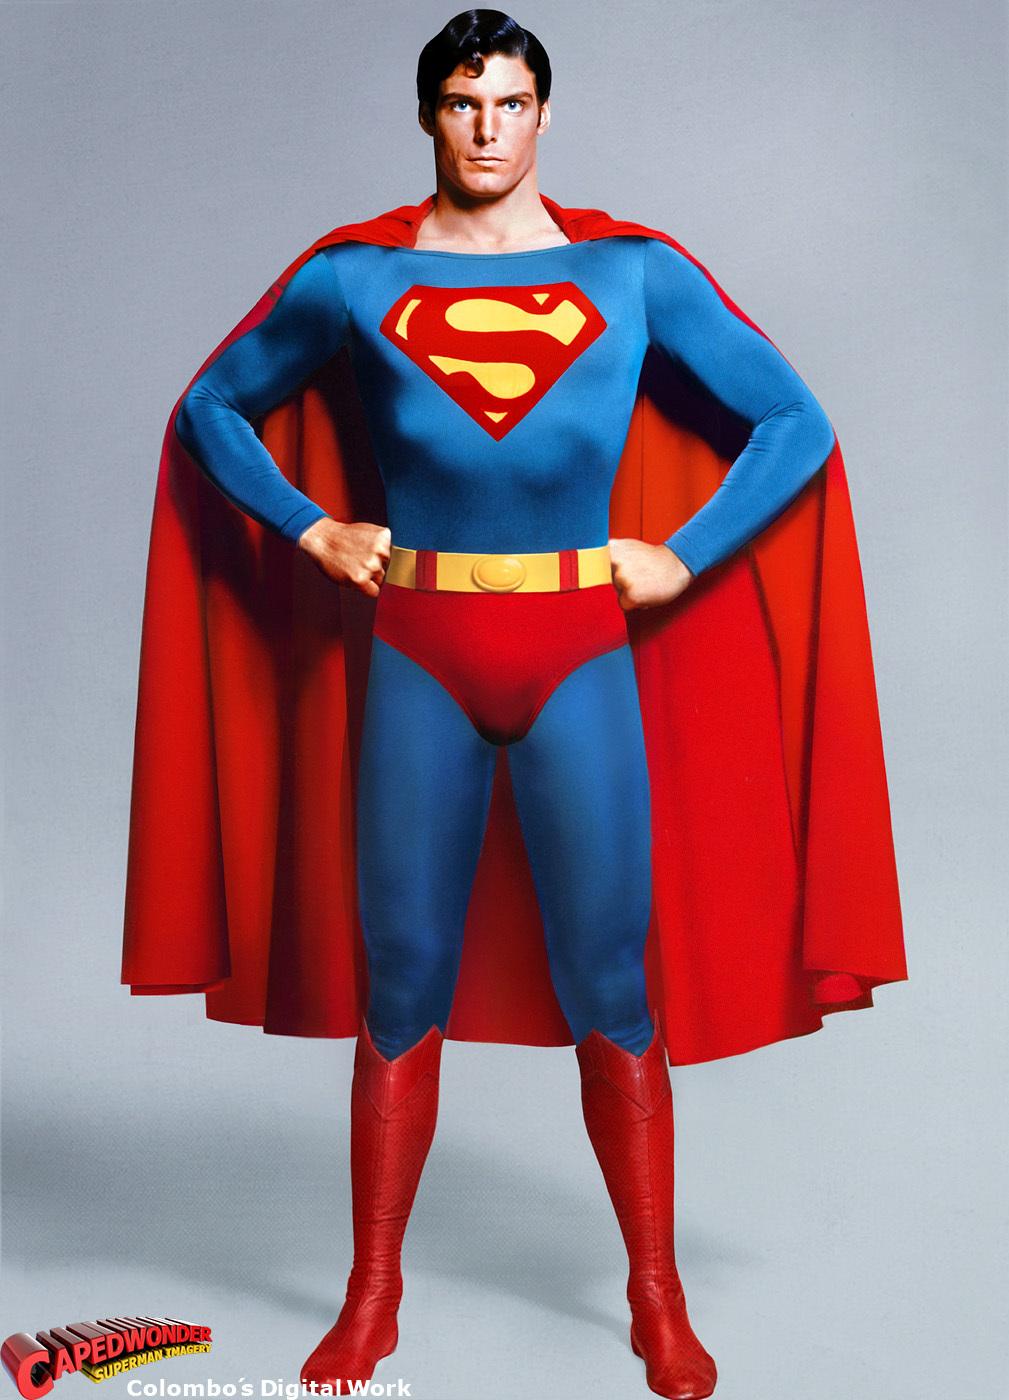 Superman Image, Fantastic Superman Photo High